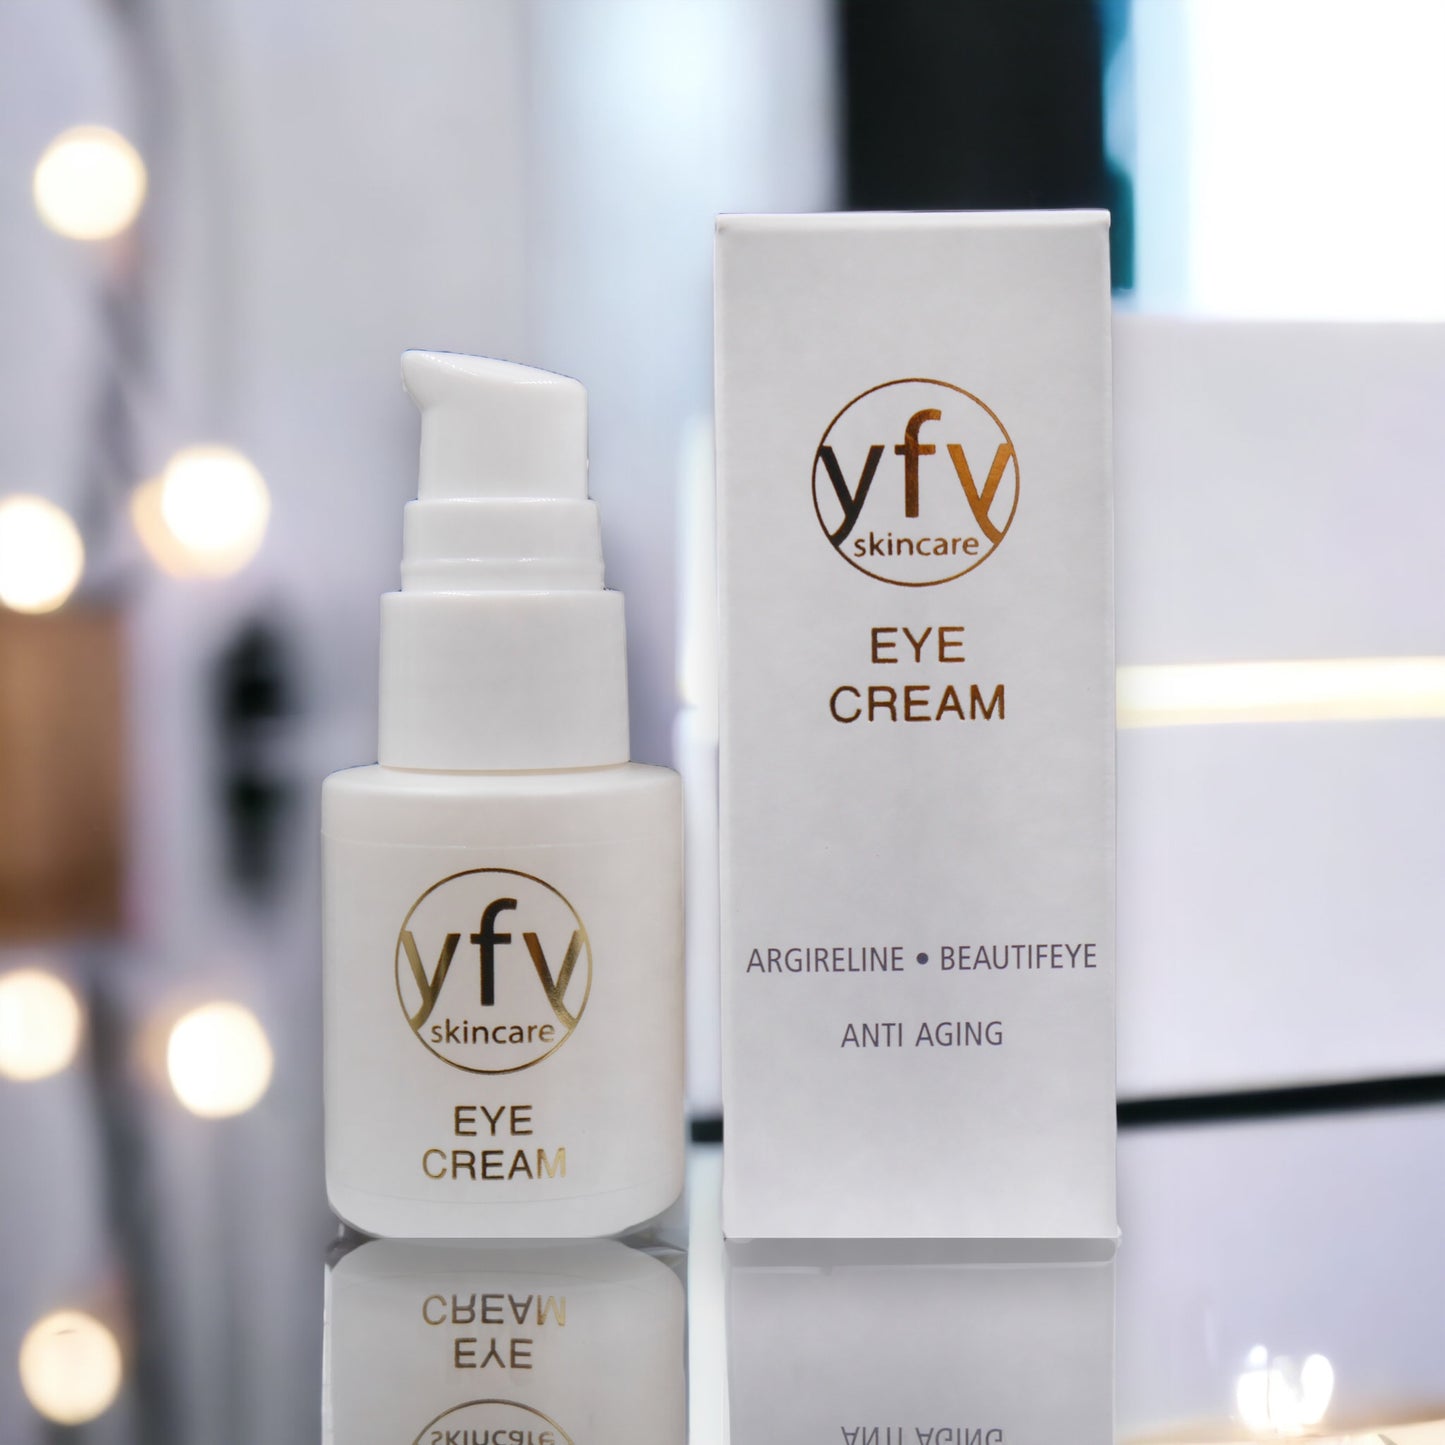 yfy skincare eye cream